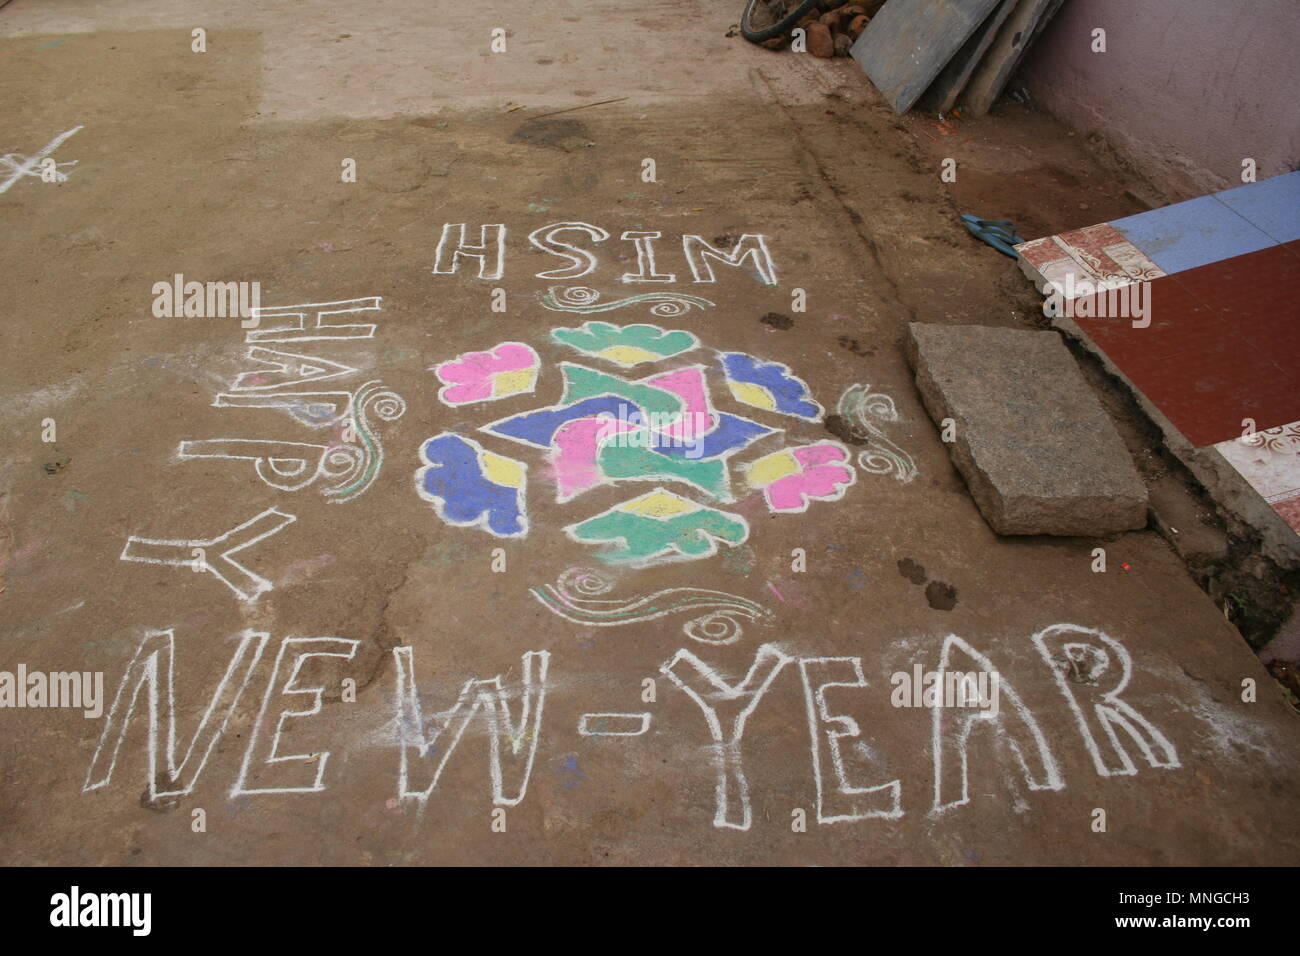 Happy New Year Chalk Drawing, Hampi, India Stock Photo - Alamy